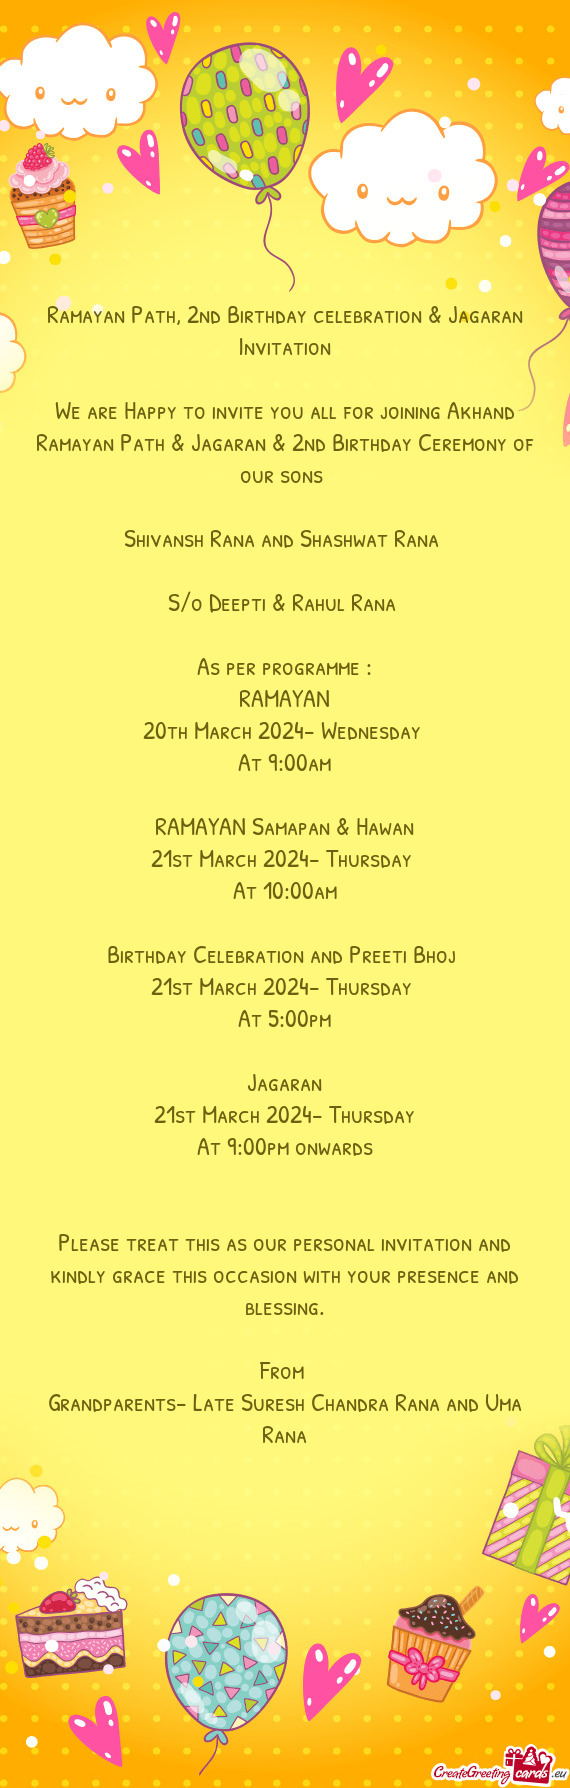 Ramayan Path, 2nd Birthday celebration & Jagaran Invitation